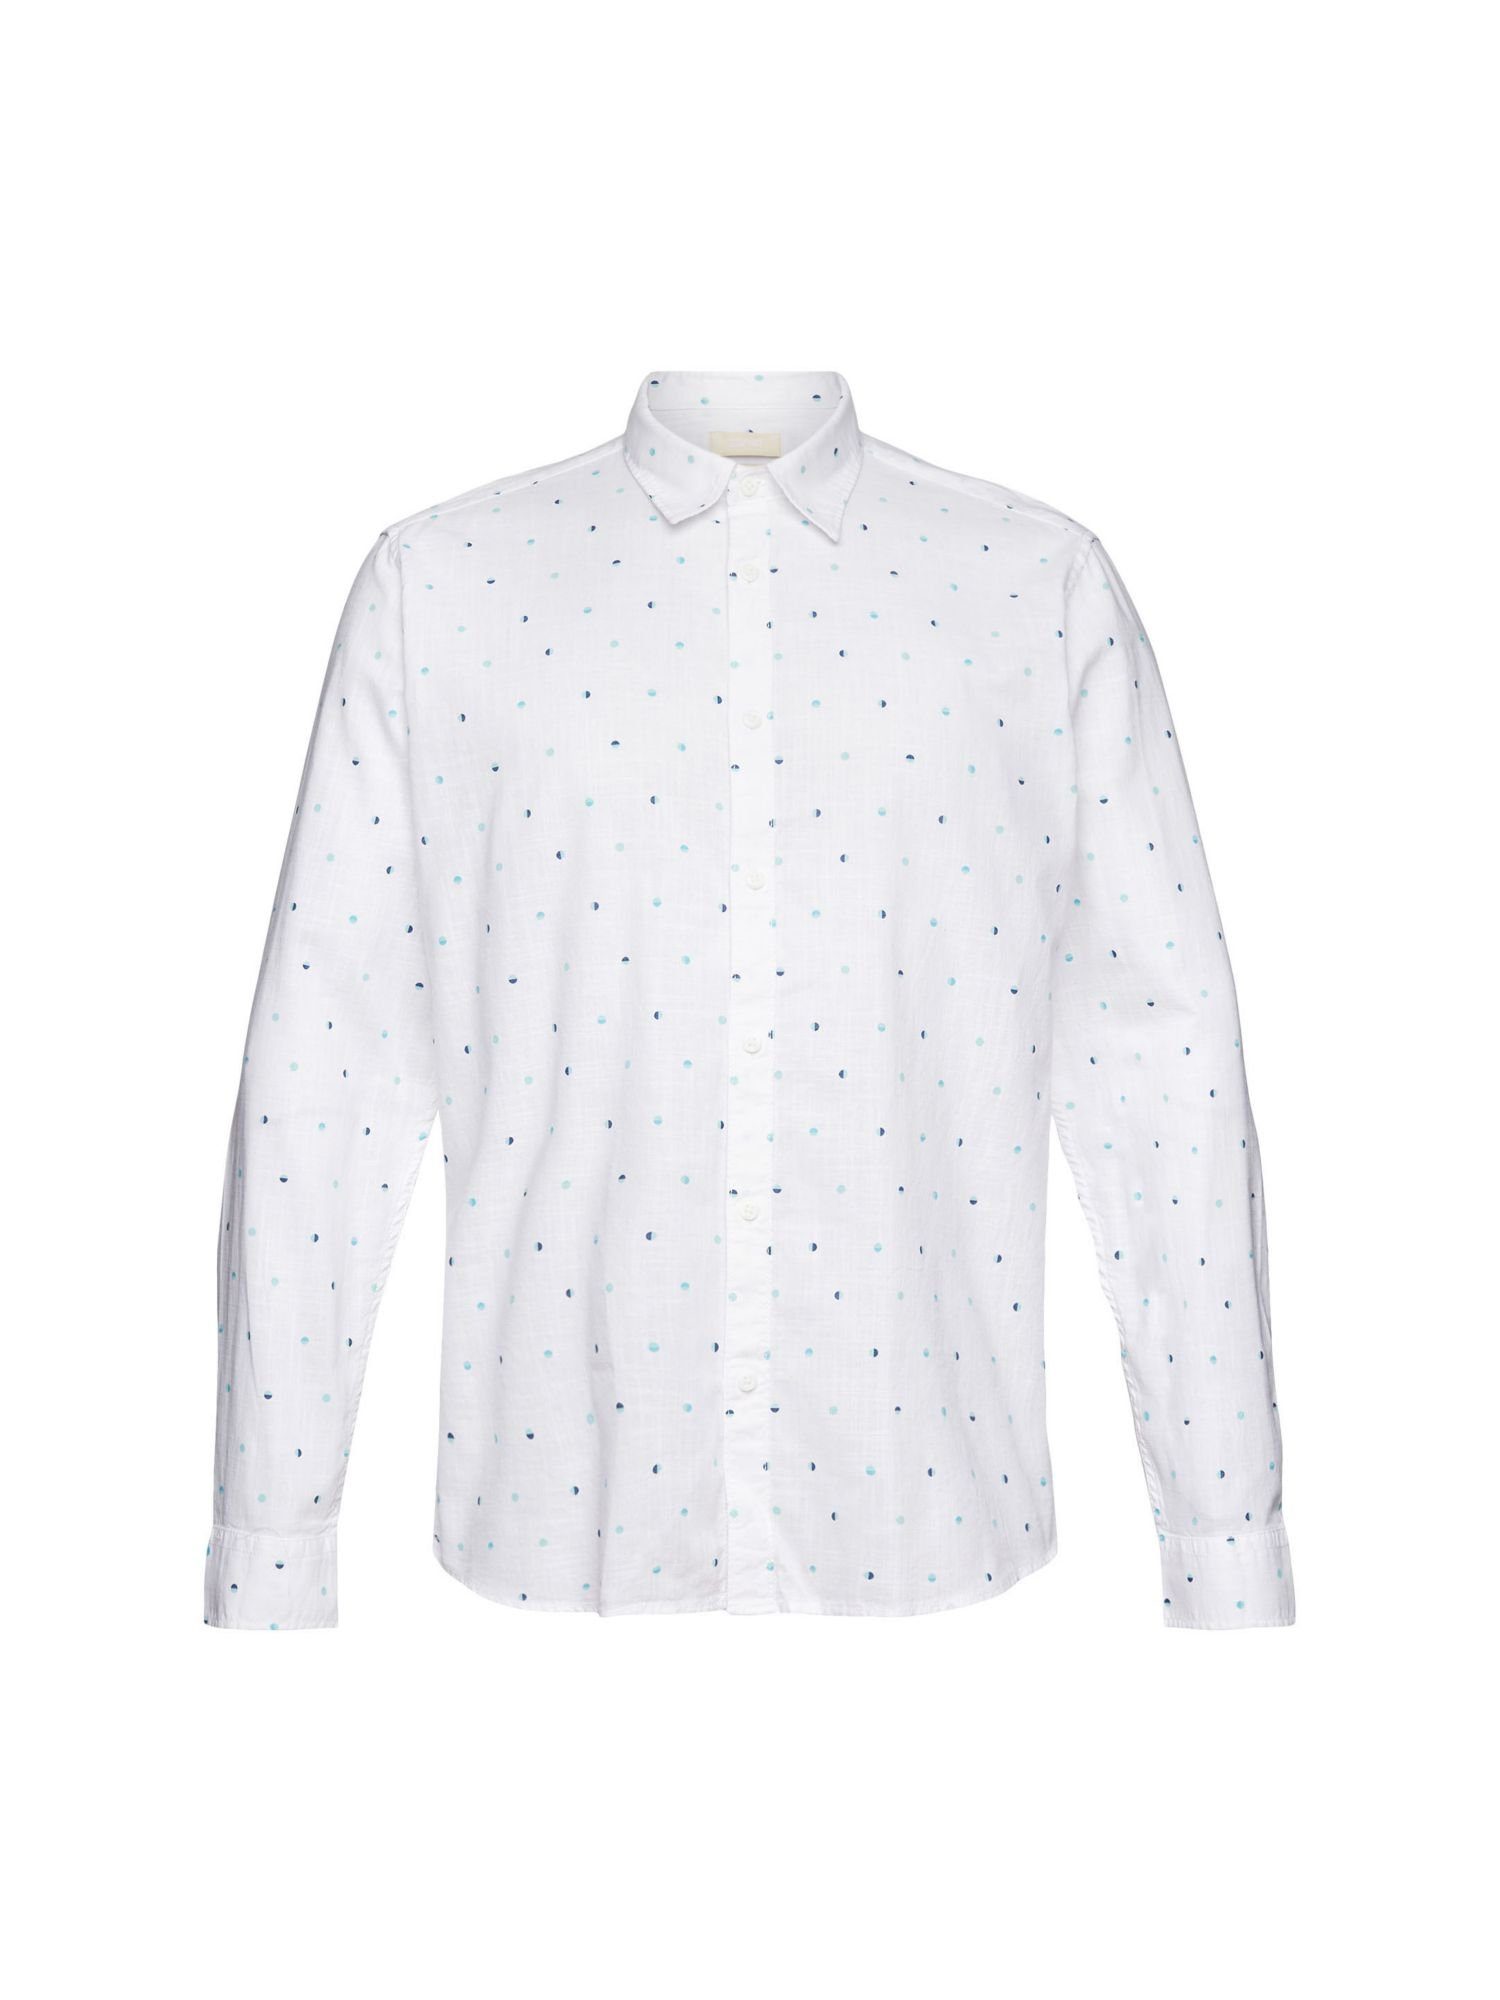 edc by Esprit Langarmhemd Hemd aus Slub Baumwolle mit Lunar-Dot-Muster WHITE